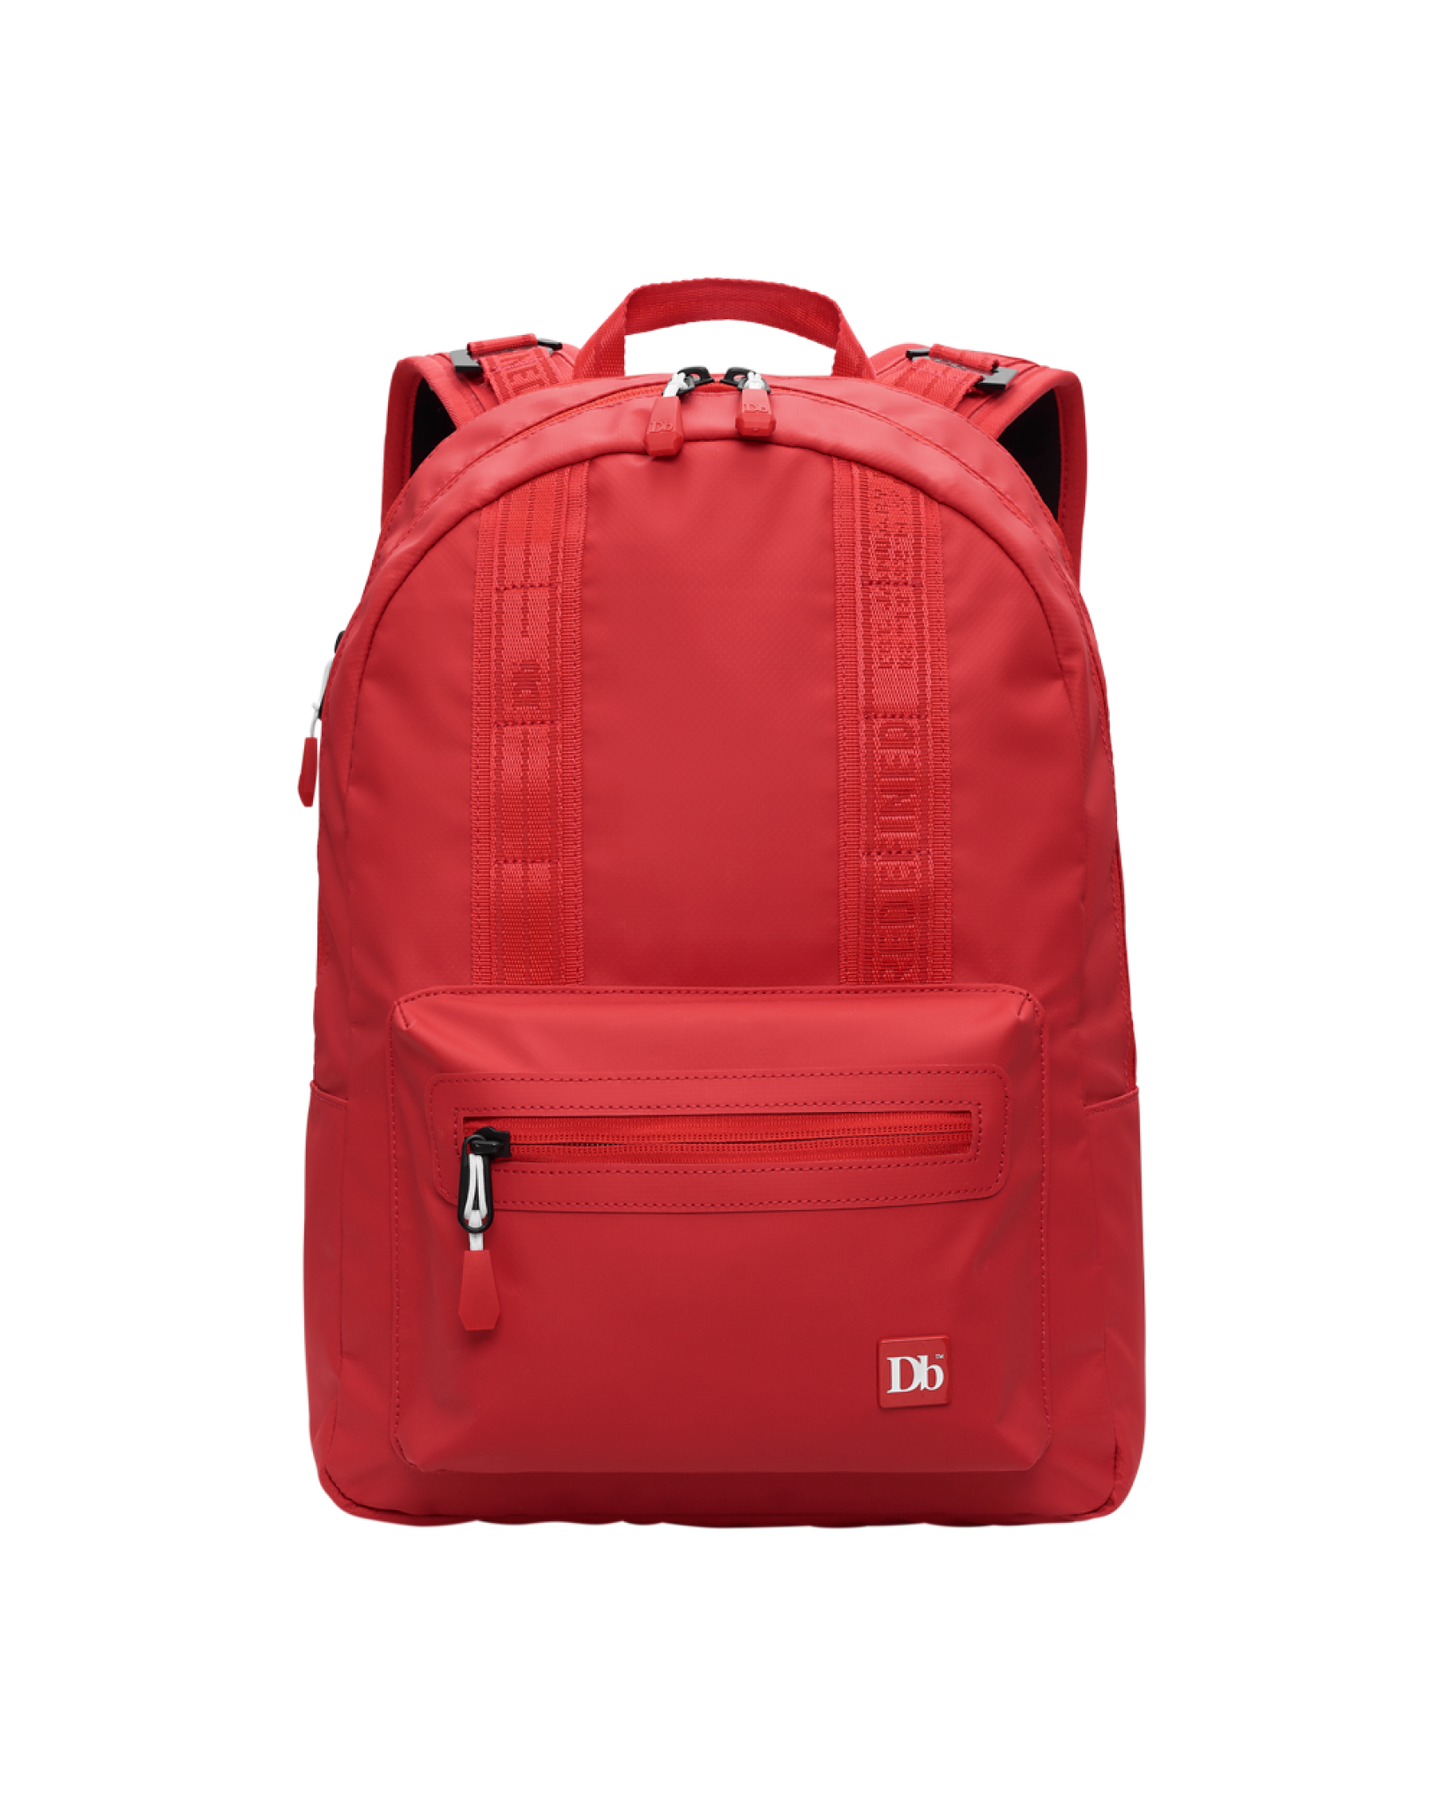 The Aera 16L Backpack